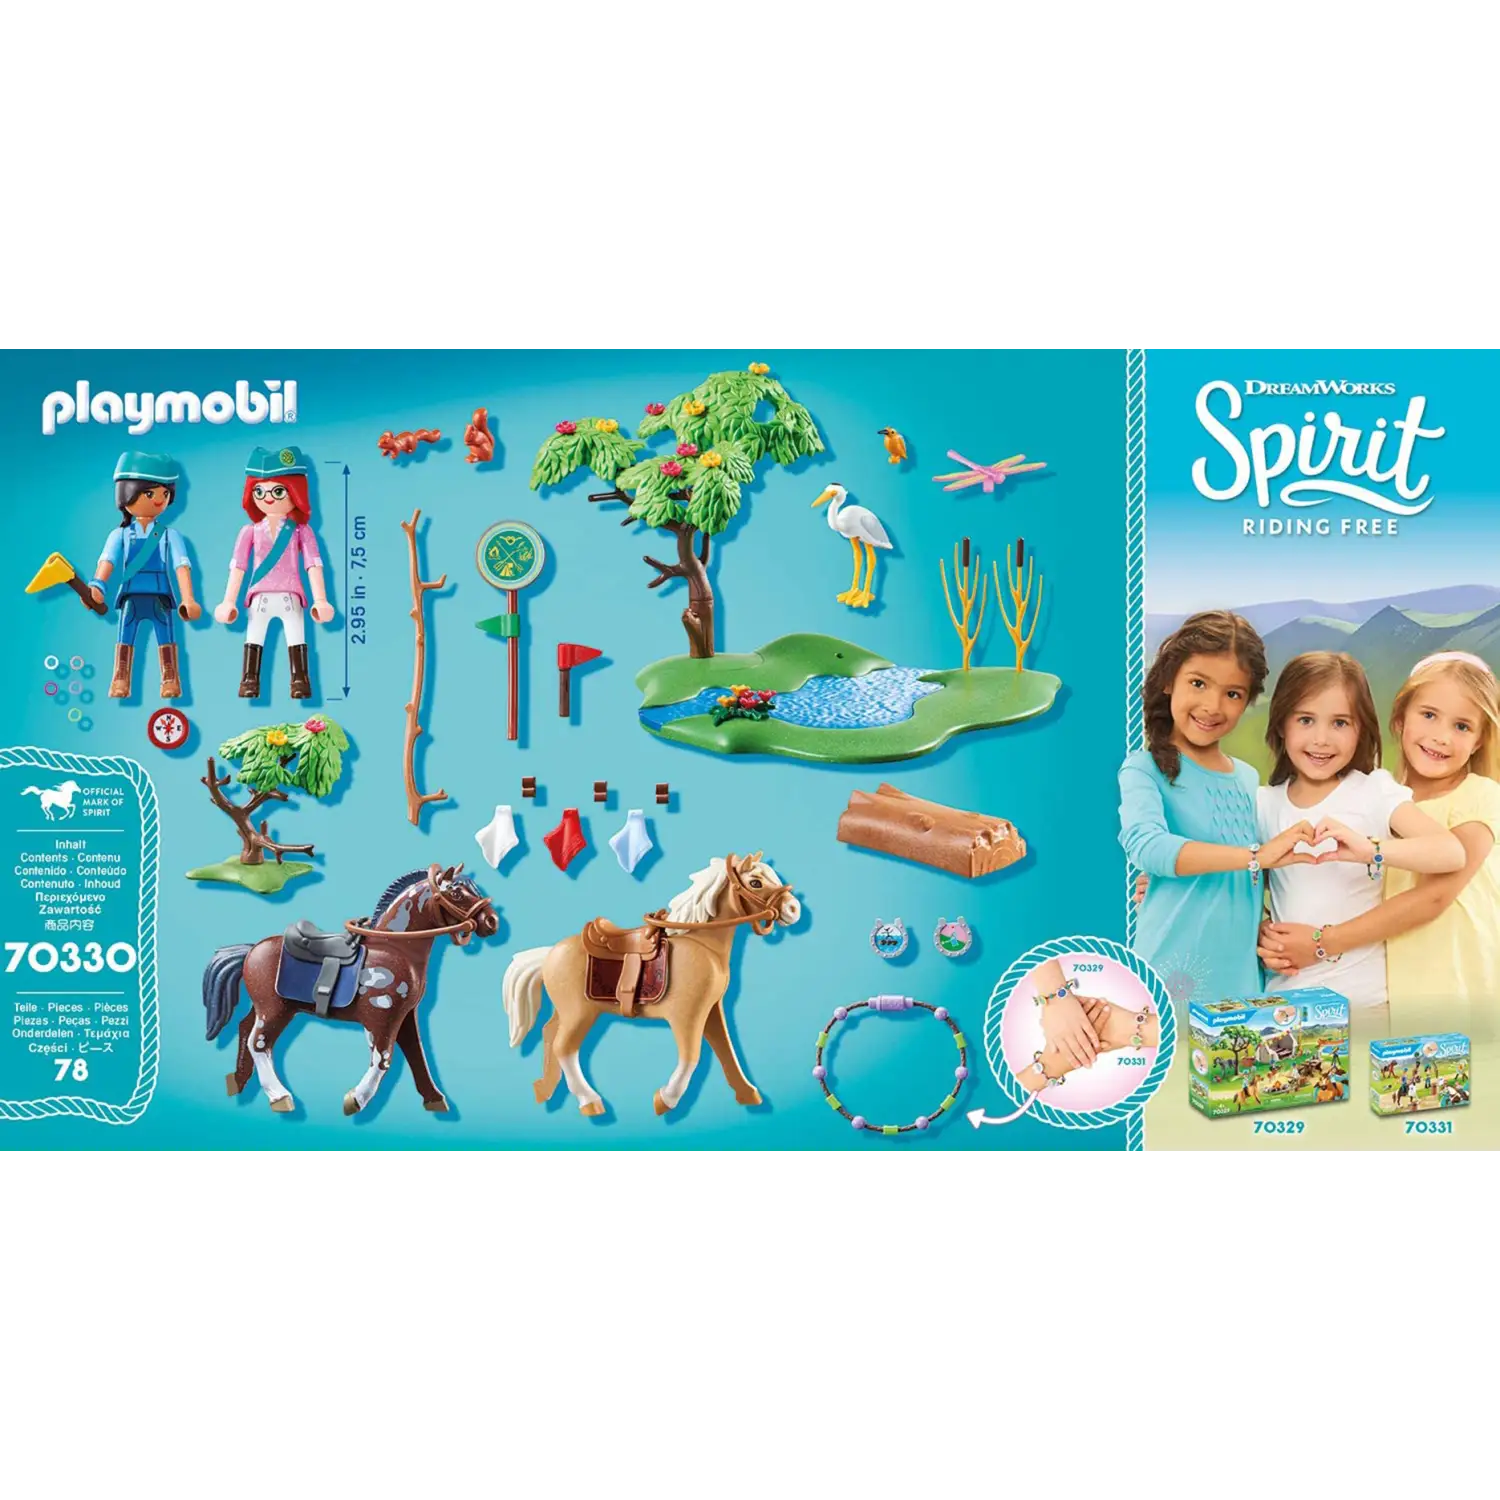 Playmobil Spirit - River Challenge 70330 (for Kids 4 yrs old